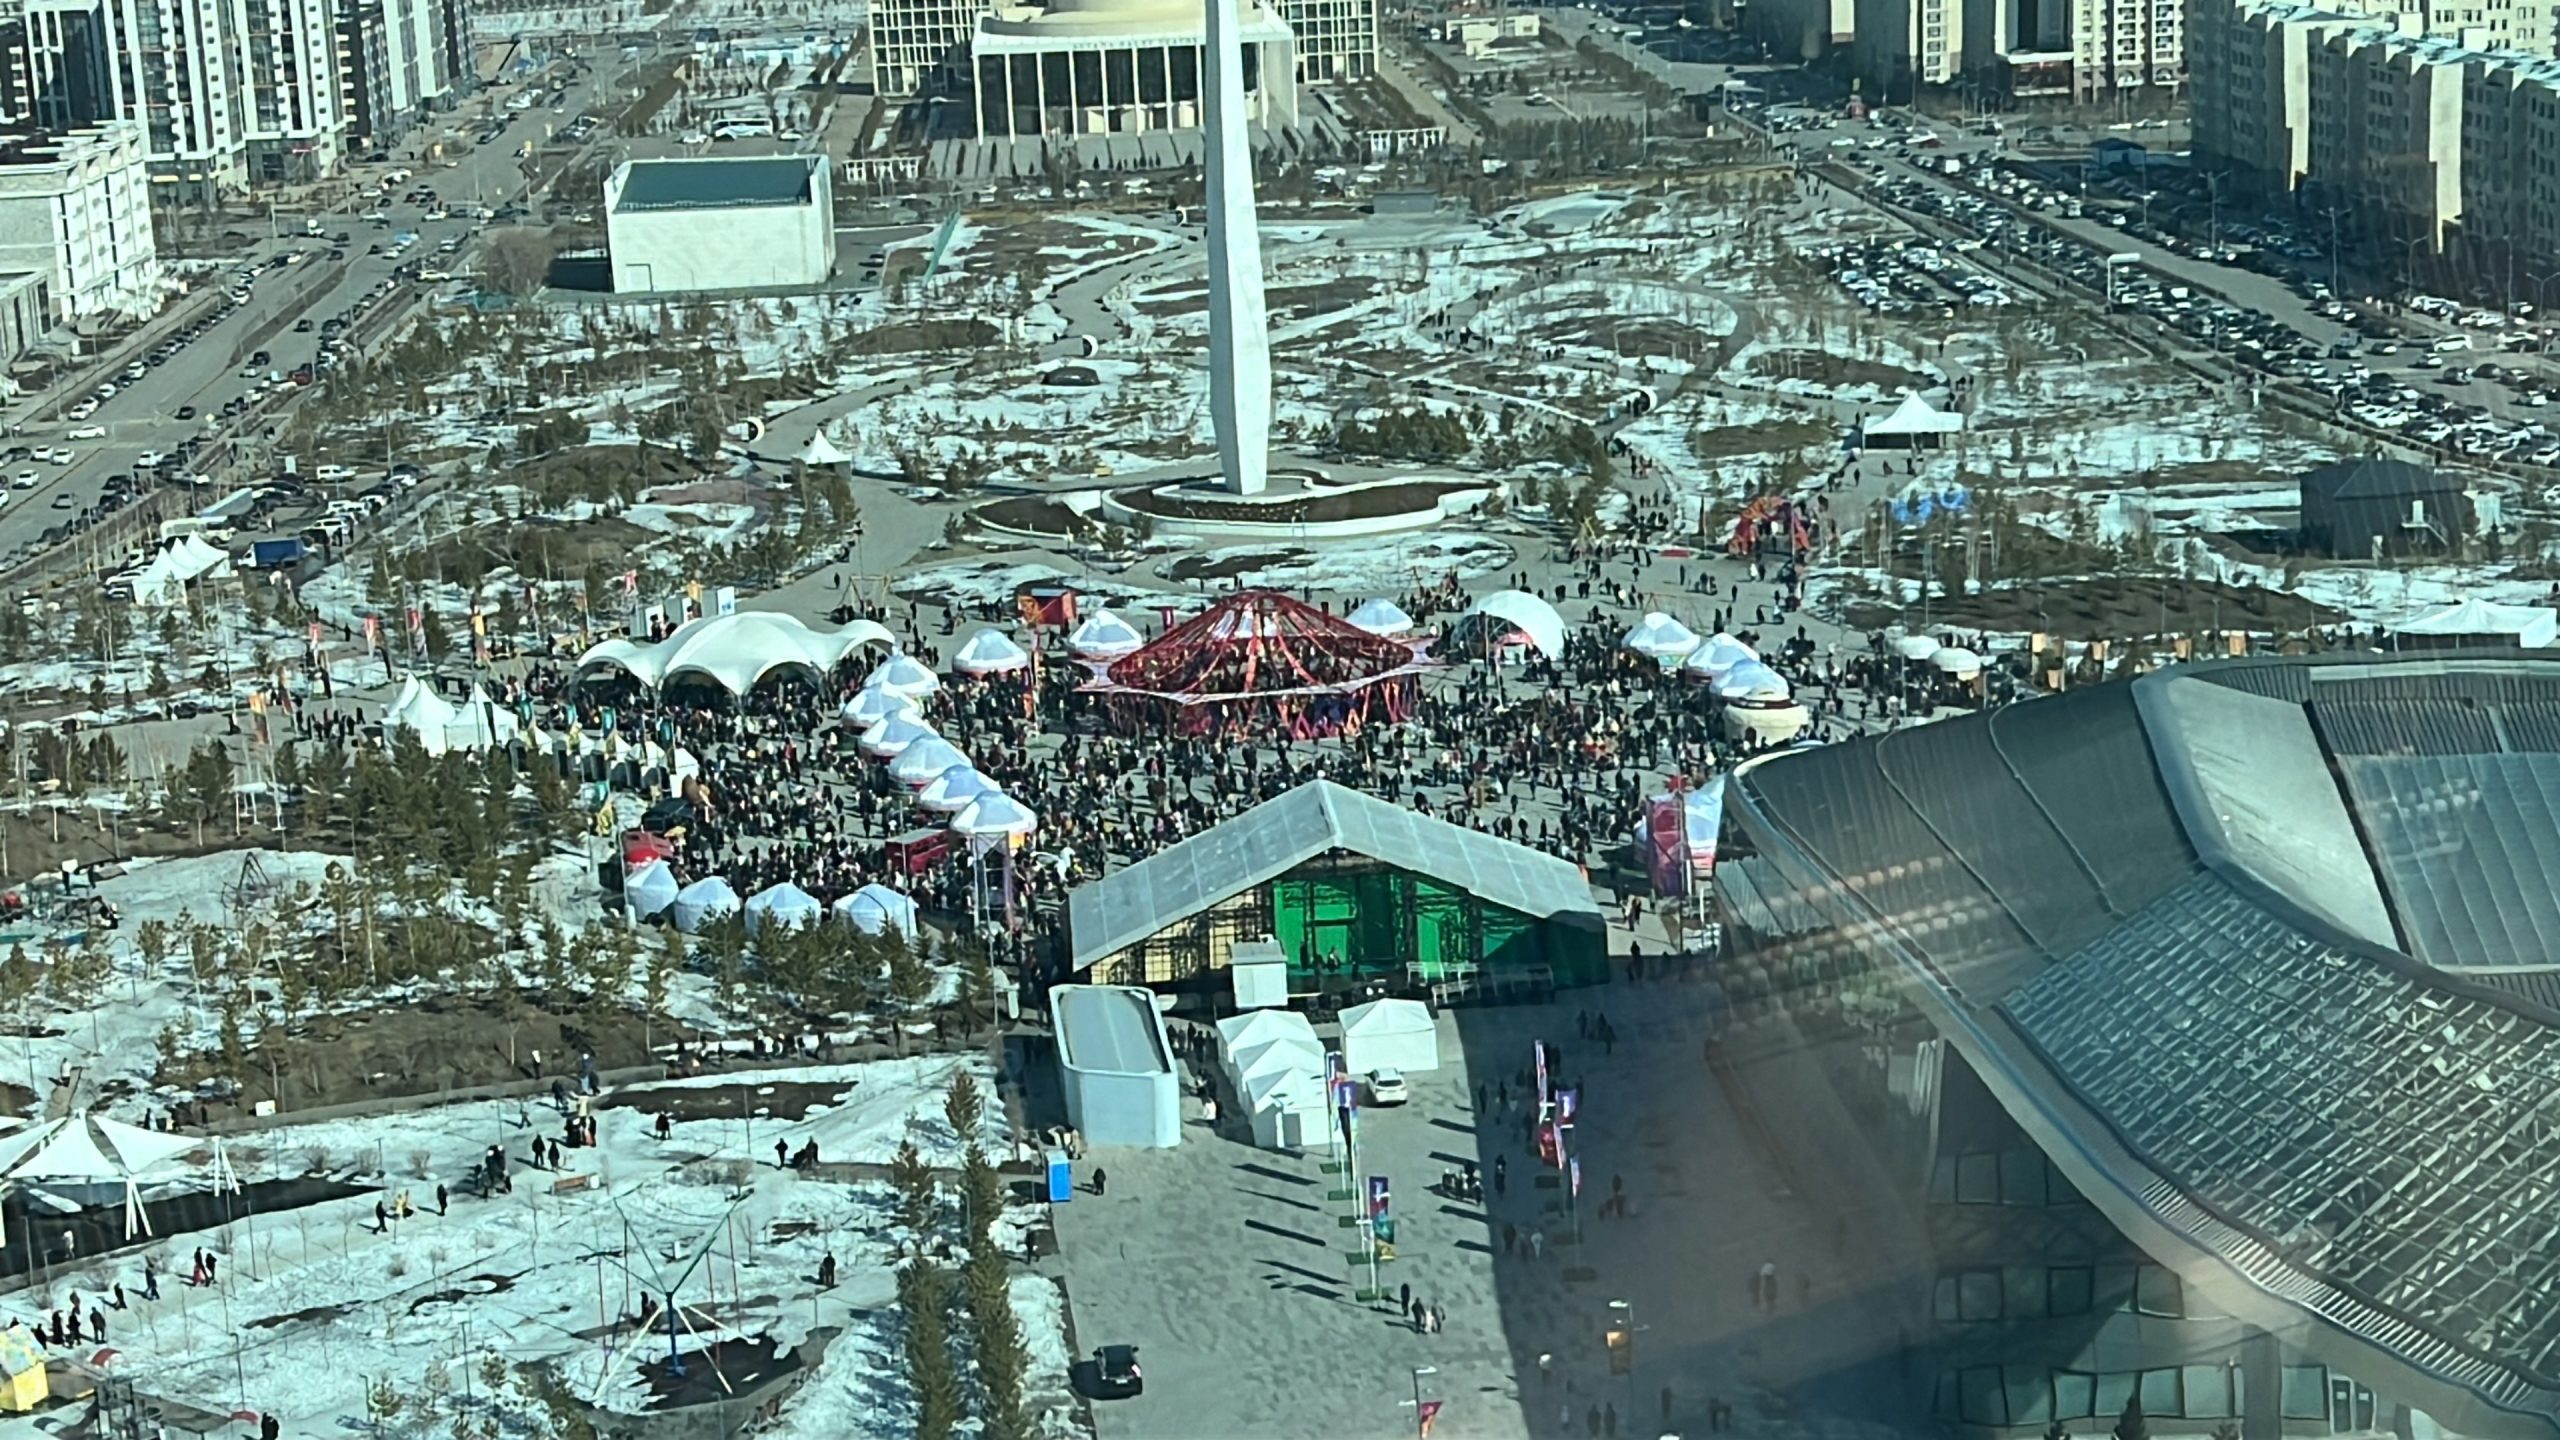 Large-scale celebration of Nauryz takes place at the EXPO